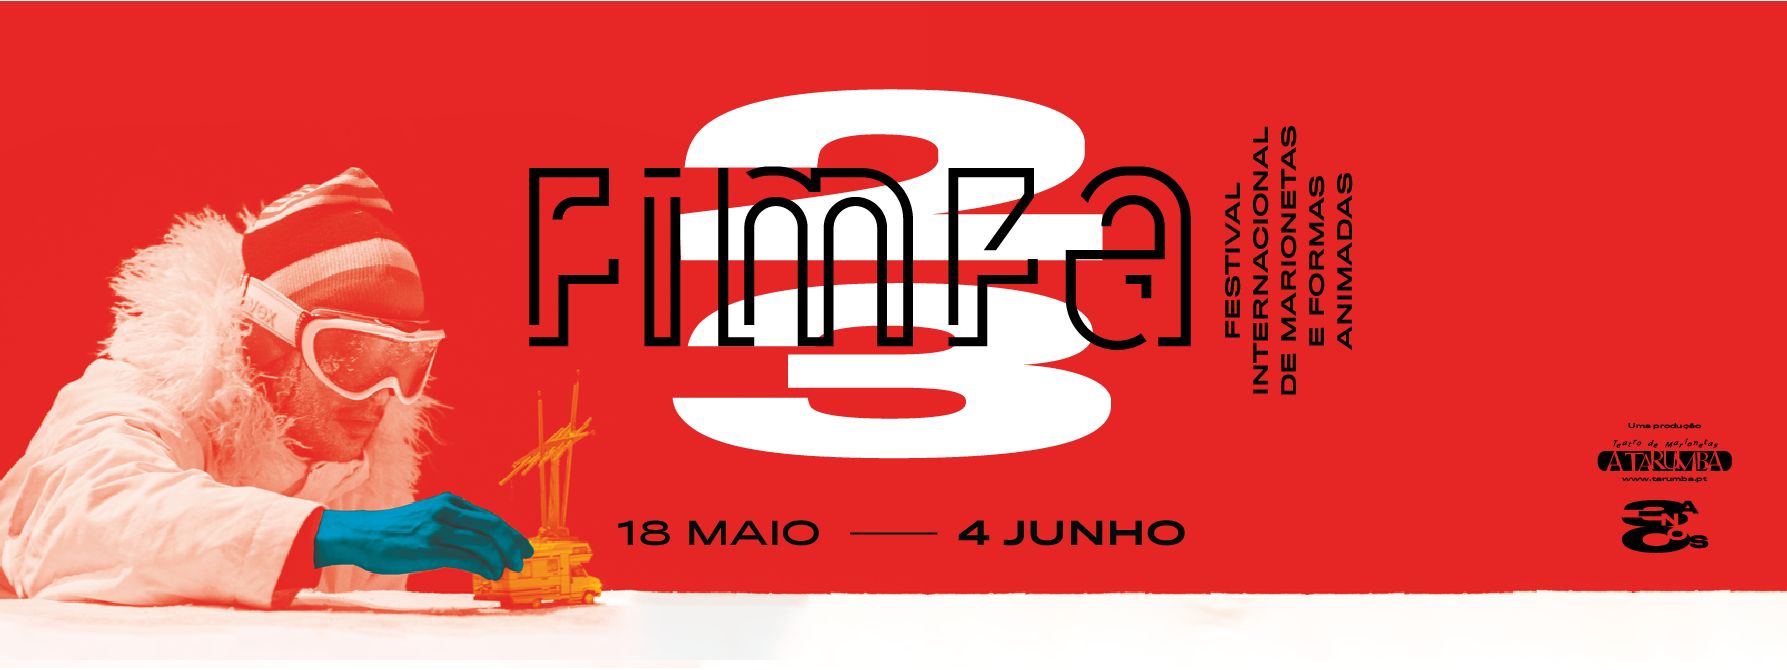 FIMFA Lx23 - Festival Internacional de Marionetas e Formas Animadas